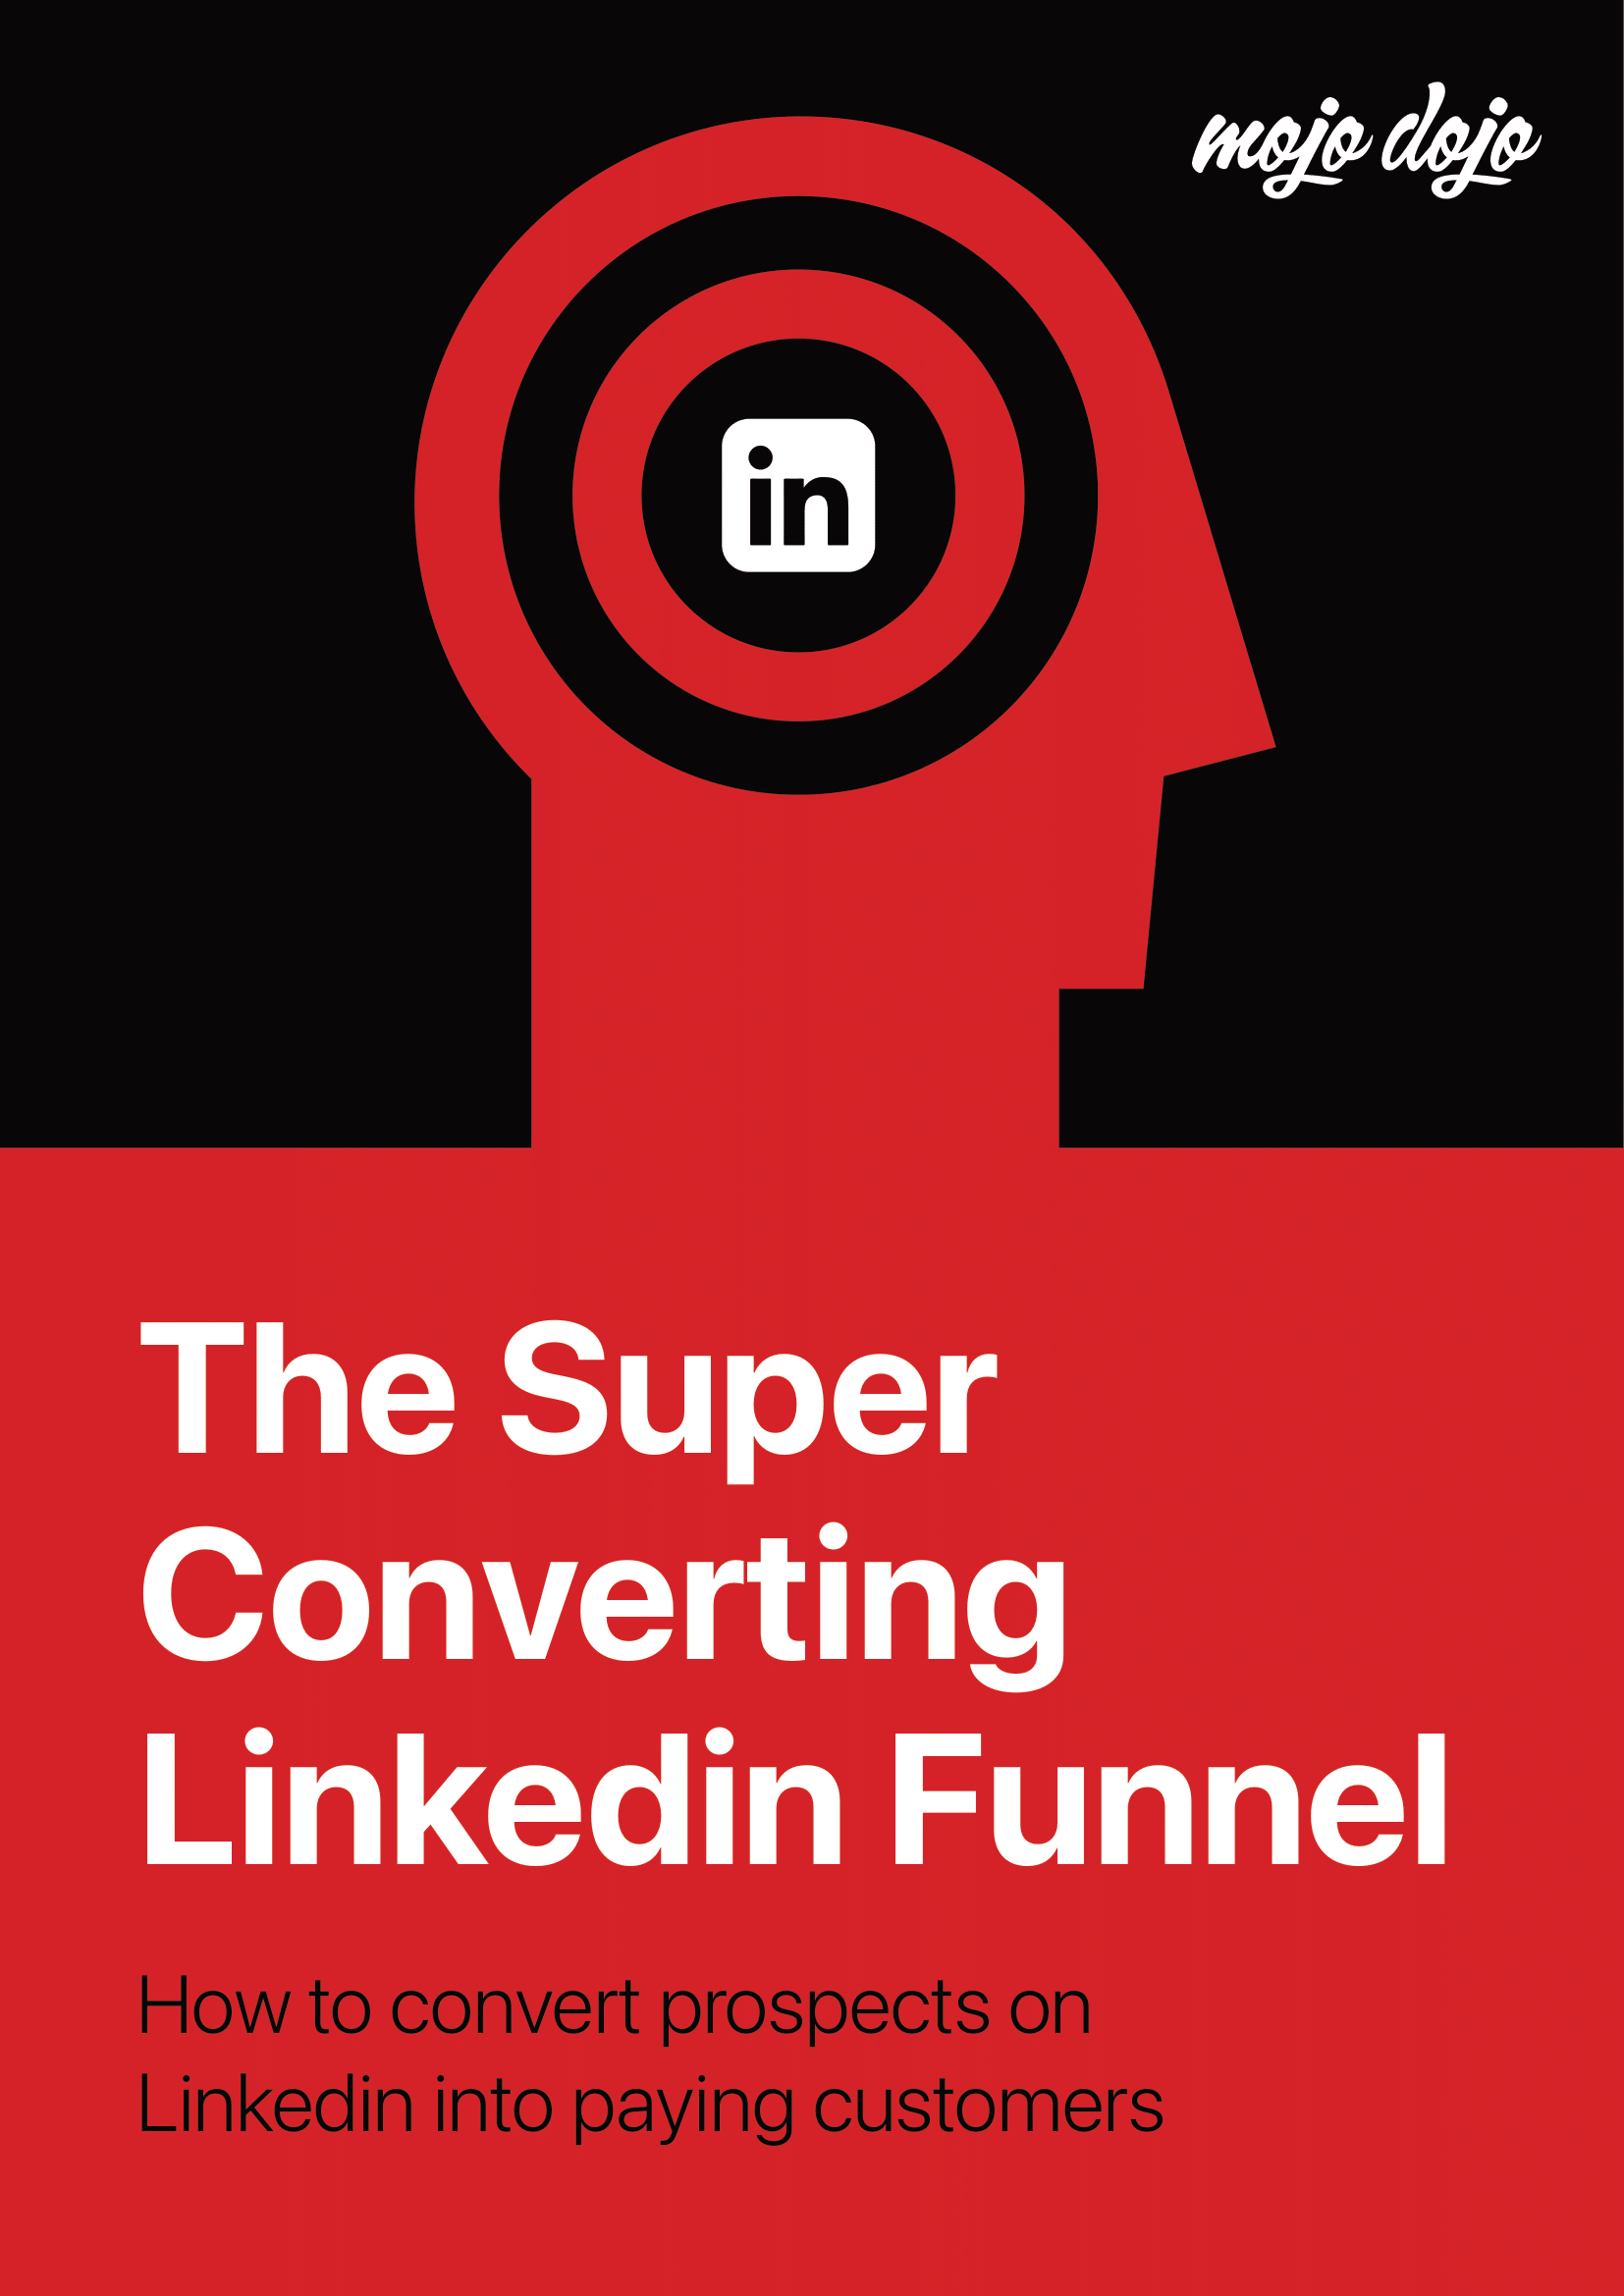 LinkedIn Funnel